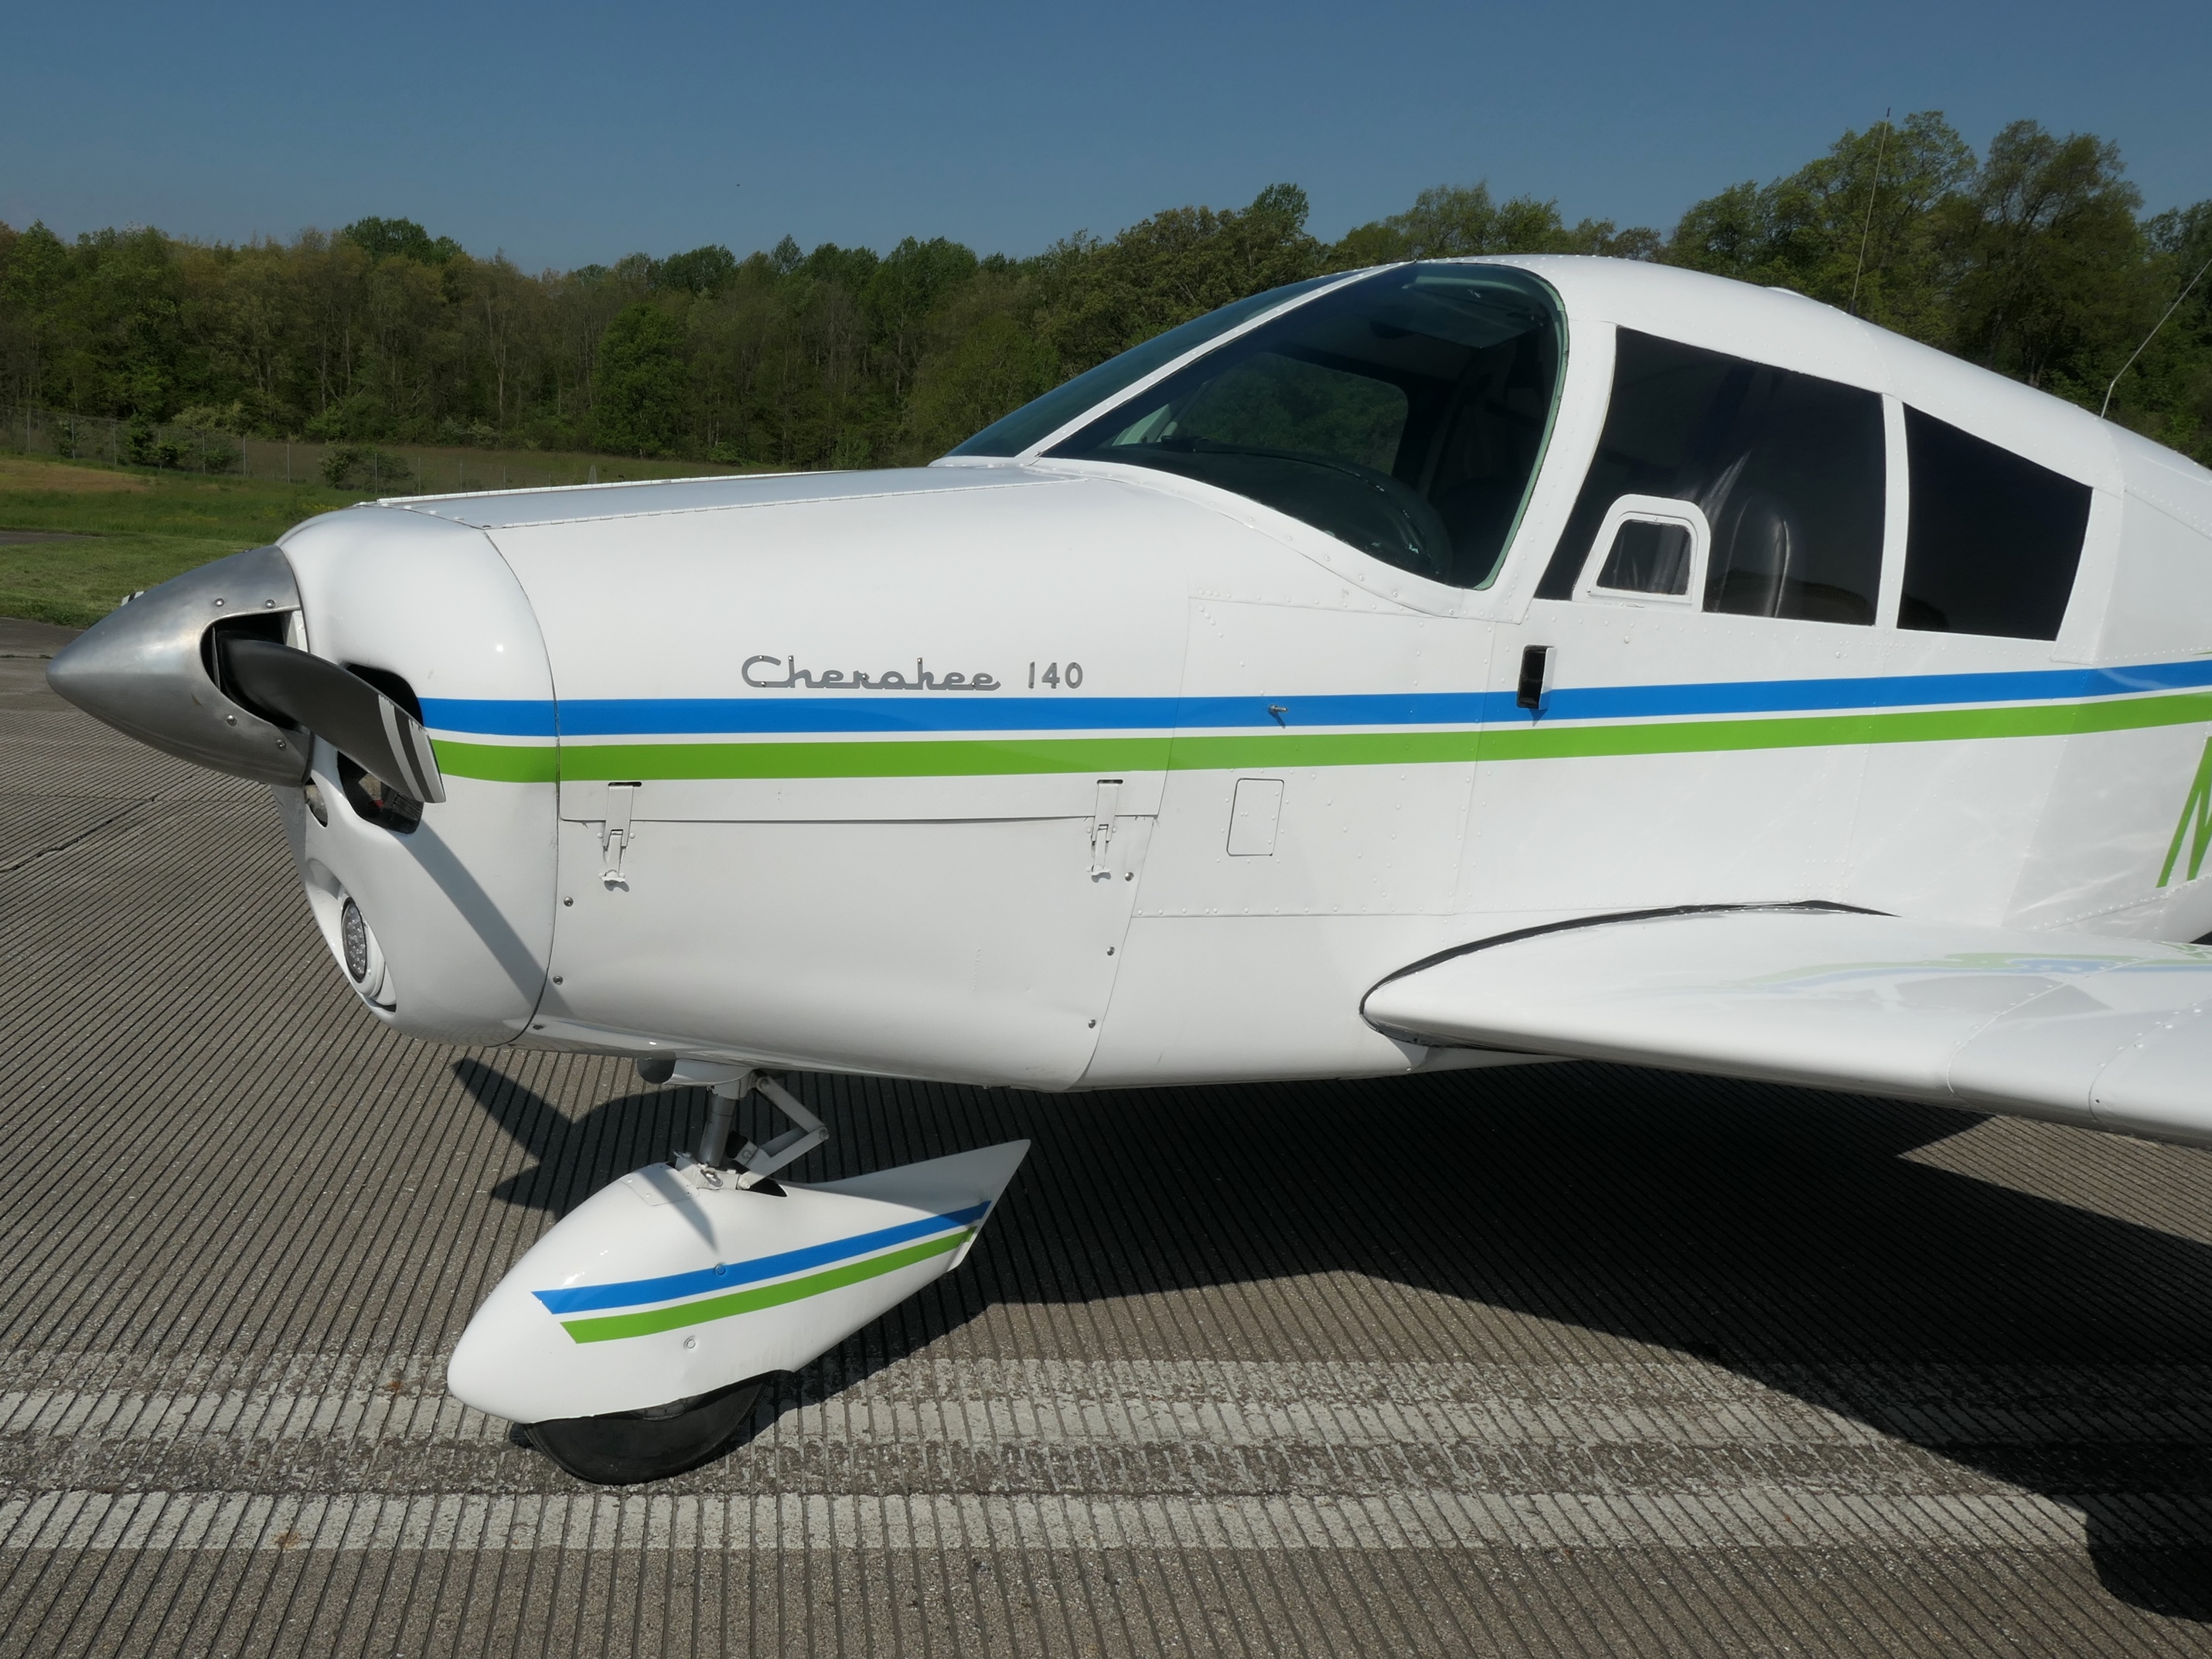 Piper Cherokee 140 - N6002W